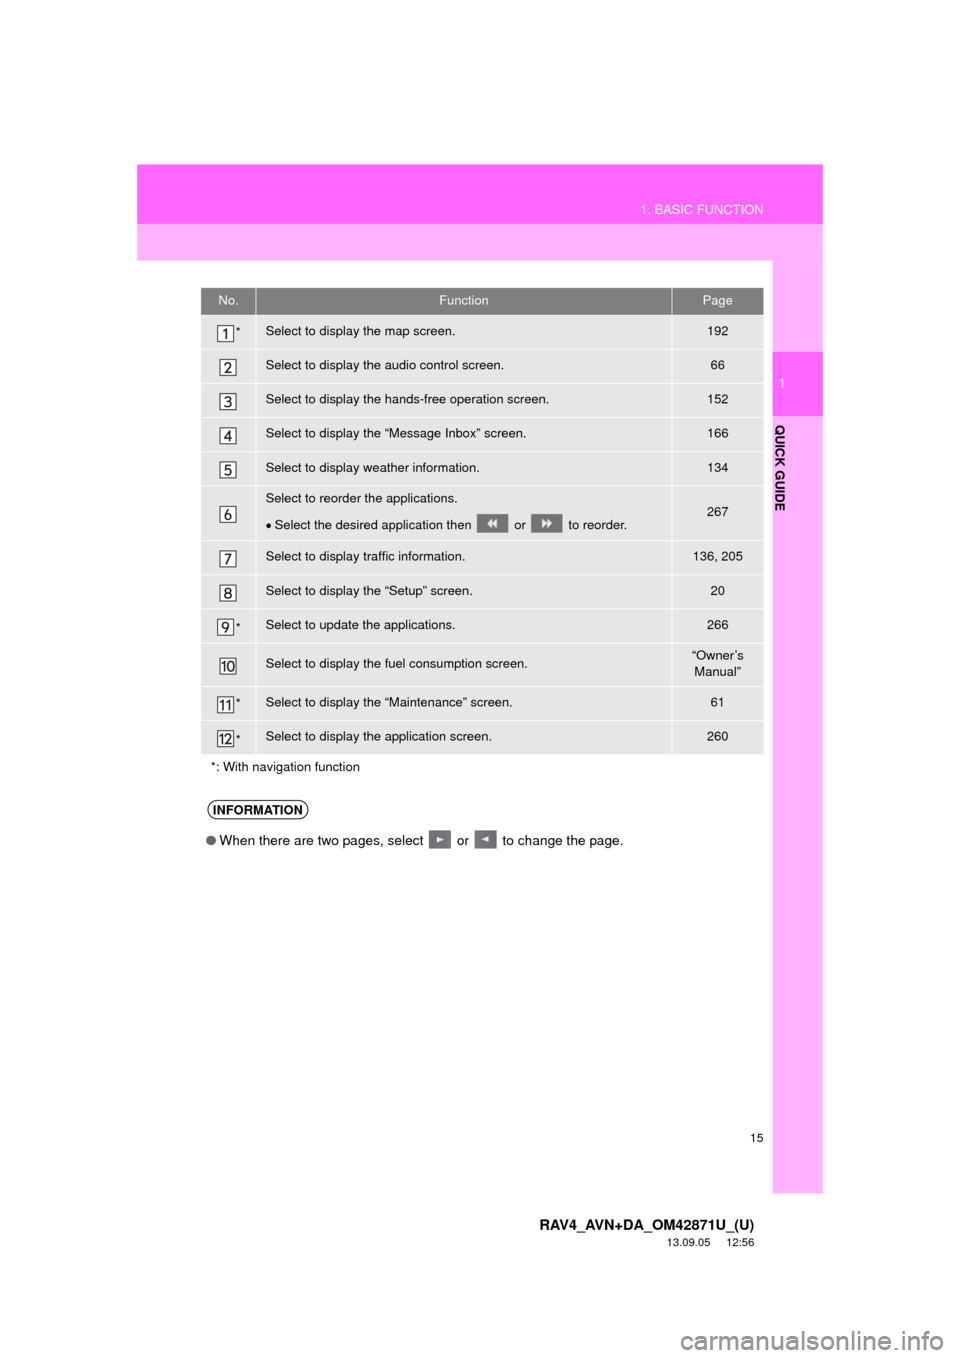 TOYOTA RAV4 2014 XA40 / 4.G Navigation Manual 15
1. BASIC FUNCTION
1
QUICK GUIDE
RAV4_AVN+DA_OM42871U_(U)
13.09.05     12:56
No.FunctionPage
*Select to display the map screen.192
Select to display the audio control screen.66
Select to display the